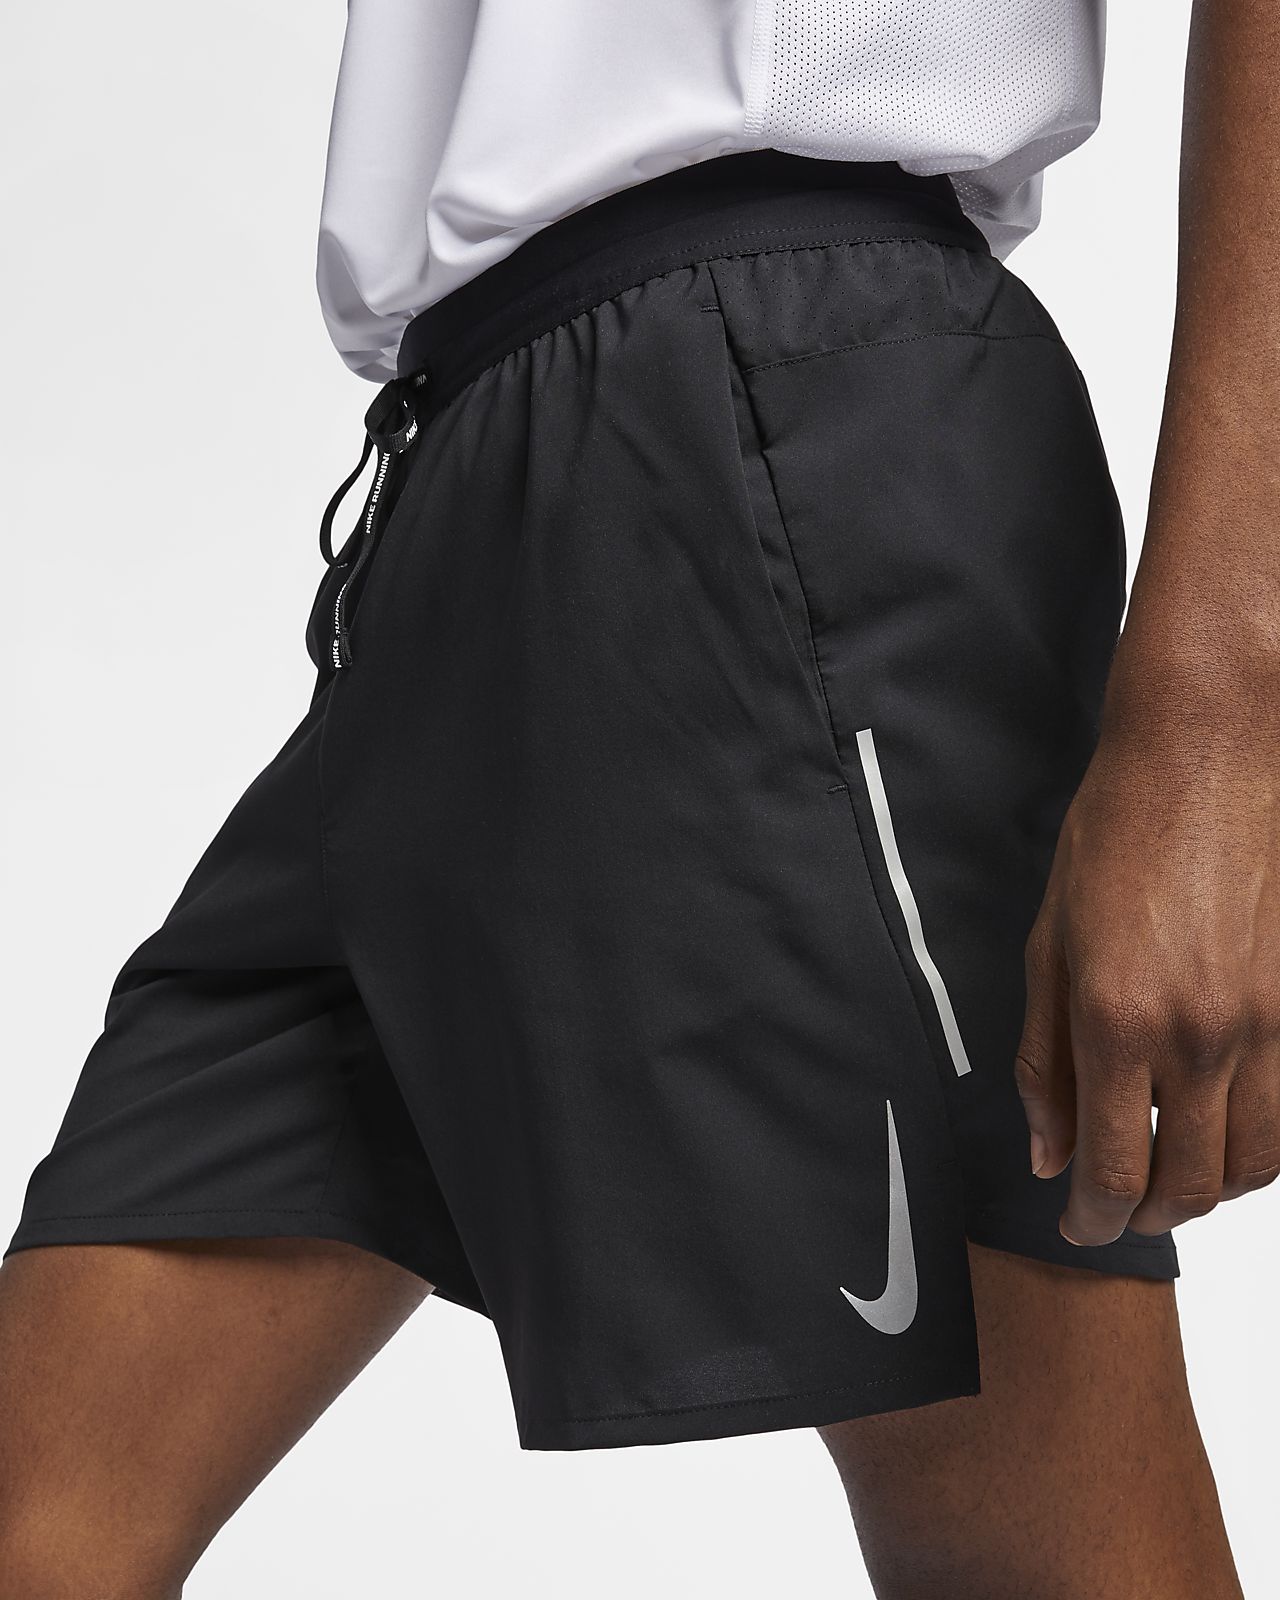 mens nike shorts with zip pockets 